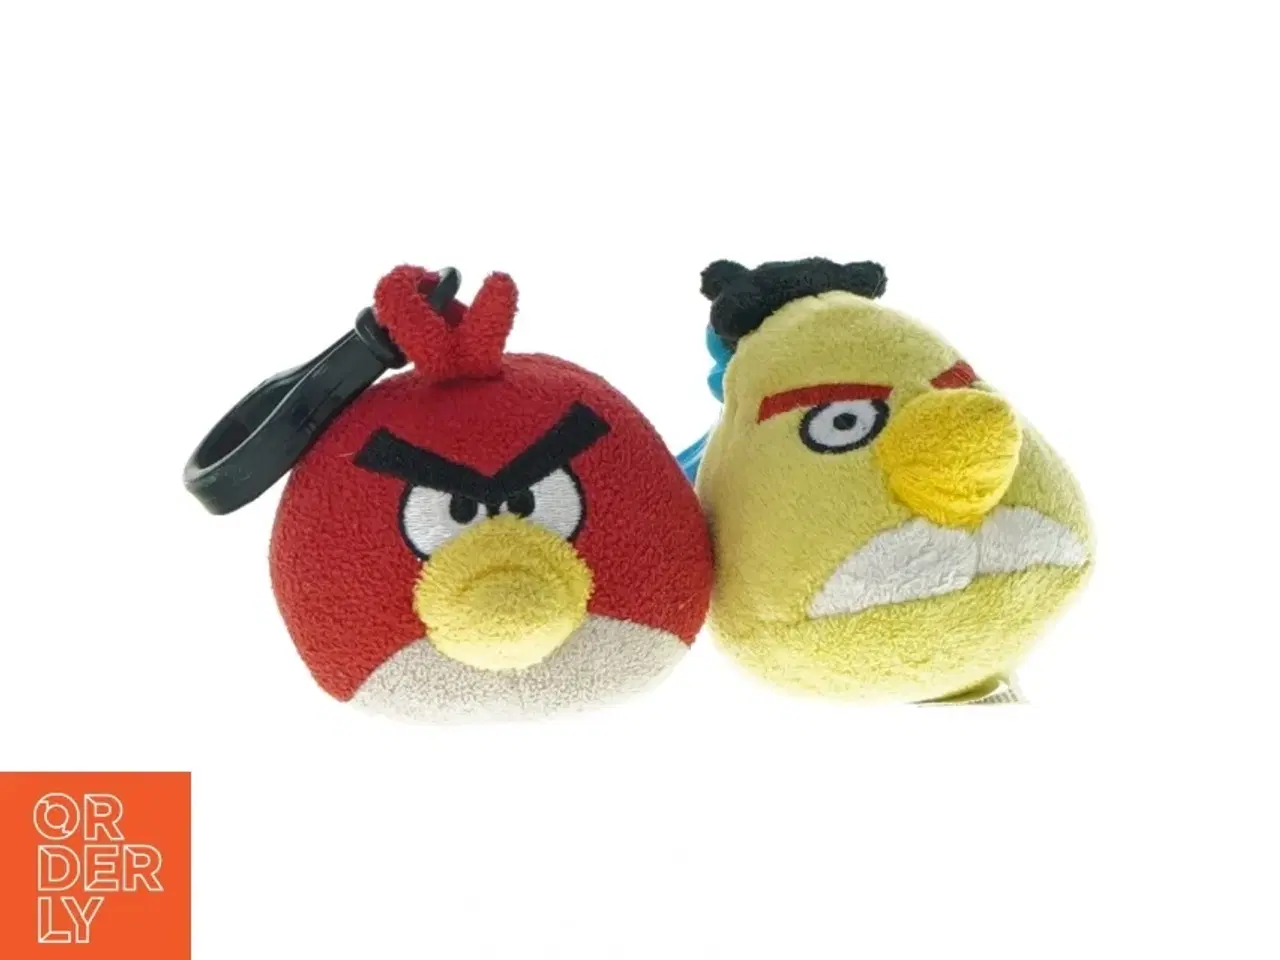 Billede 2 - Angry birds accessories (str. 8 cm)